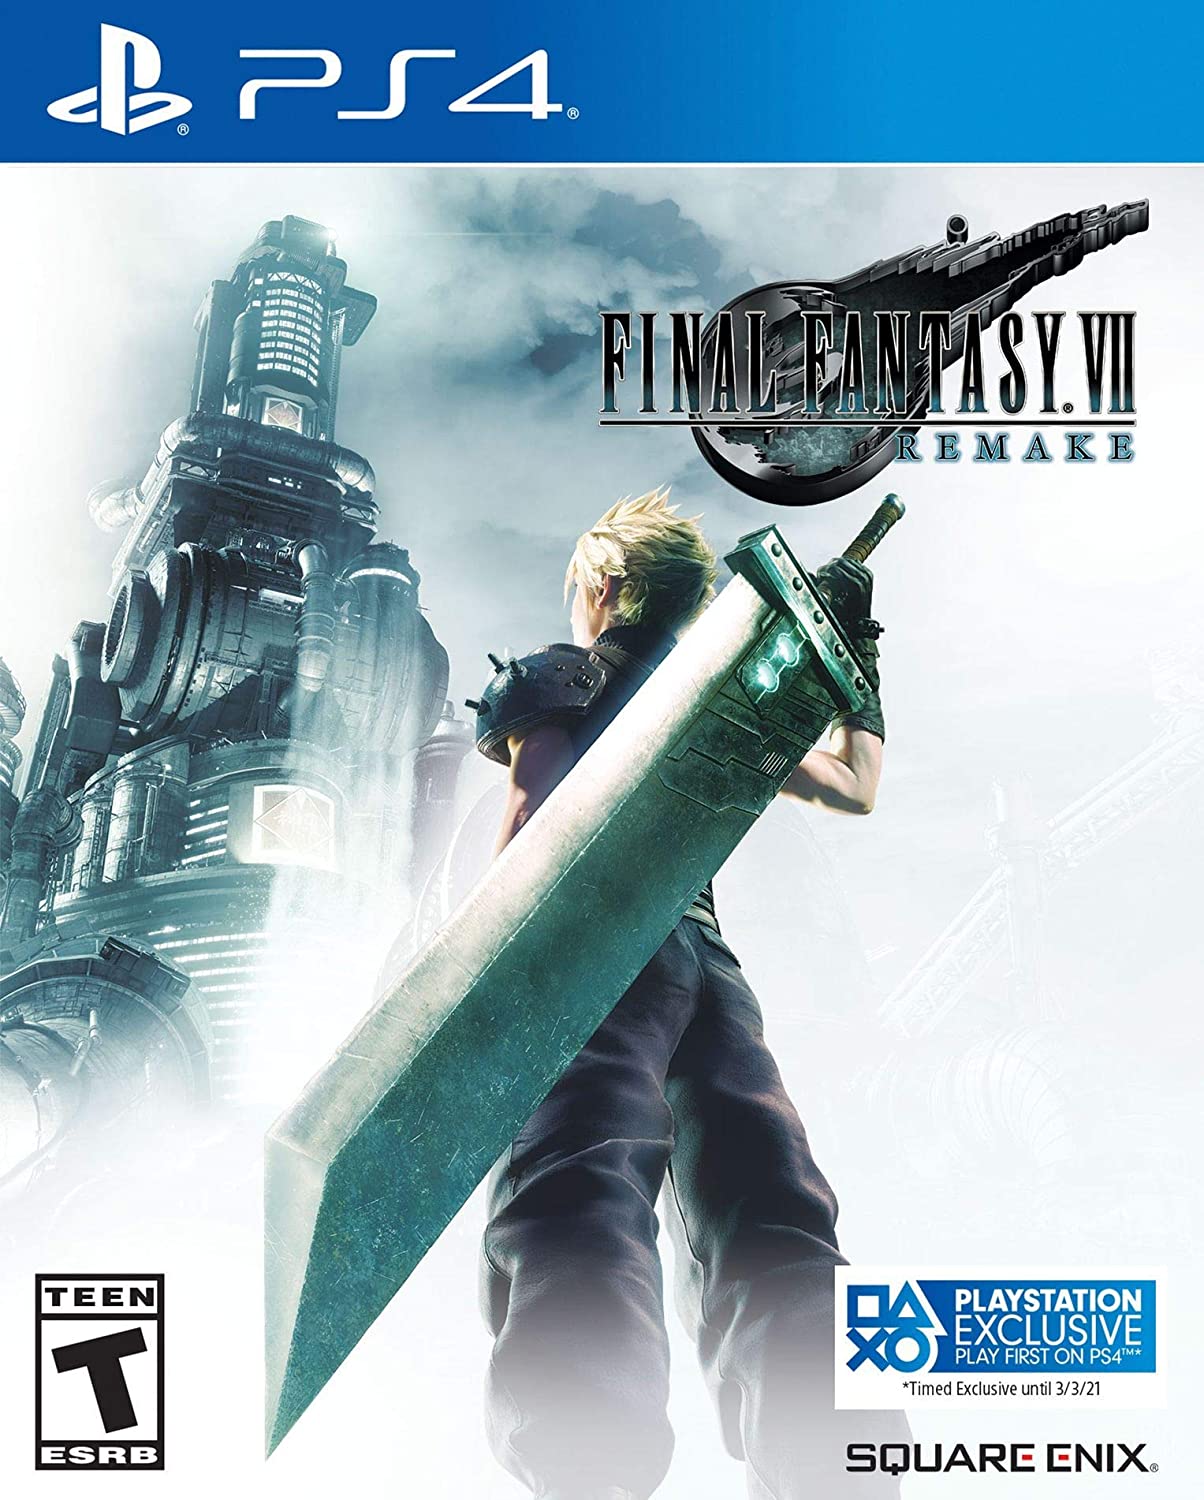 Final Fantasy VII Remake, Square Enix, PlayStation 4, 662248923192 - image 1 of 2